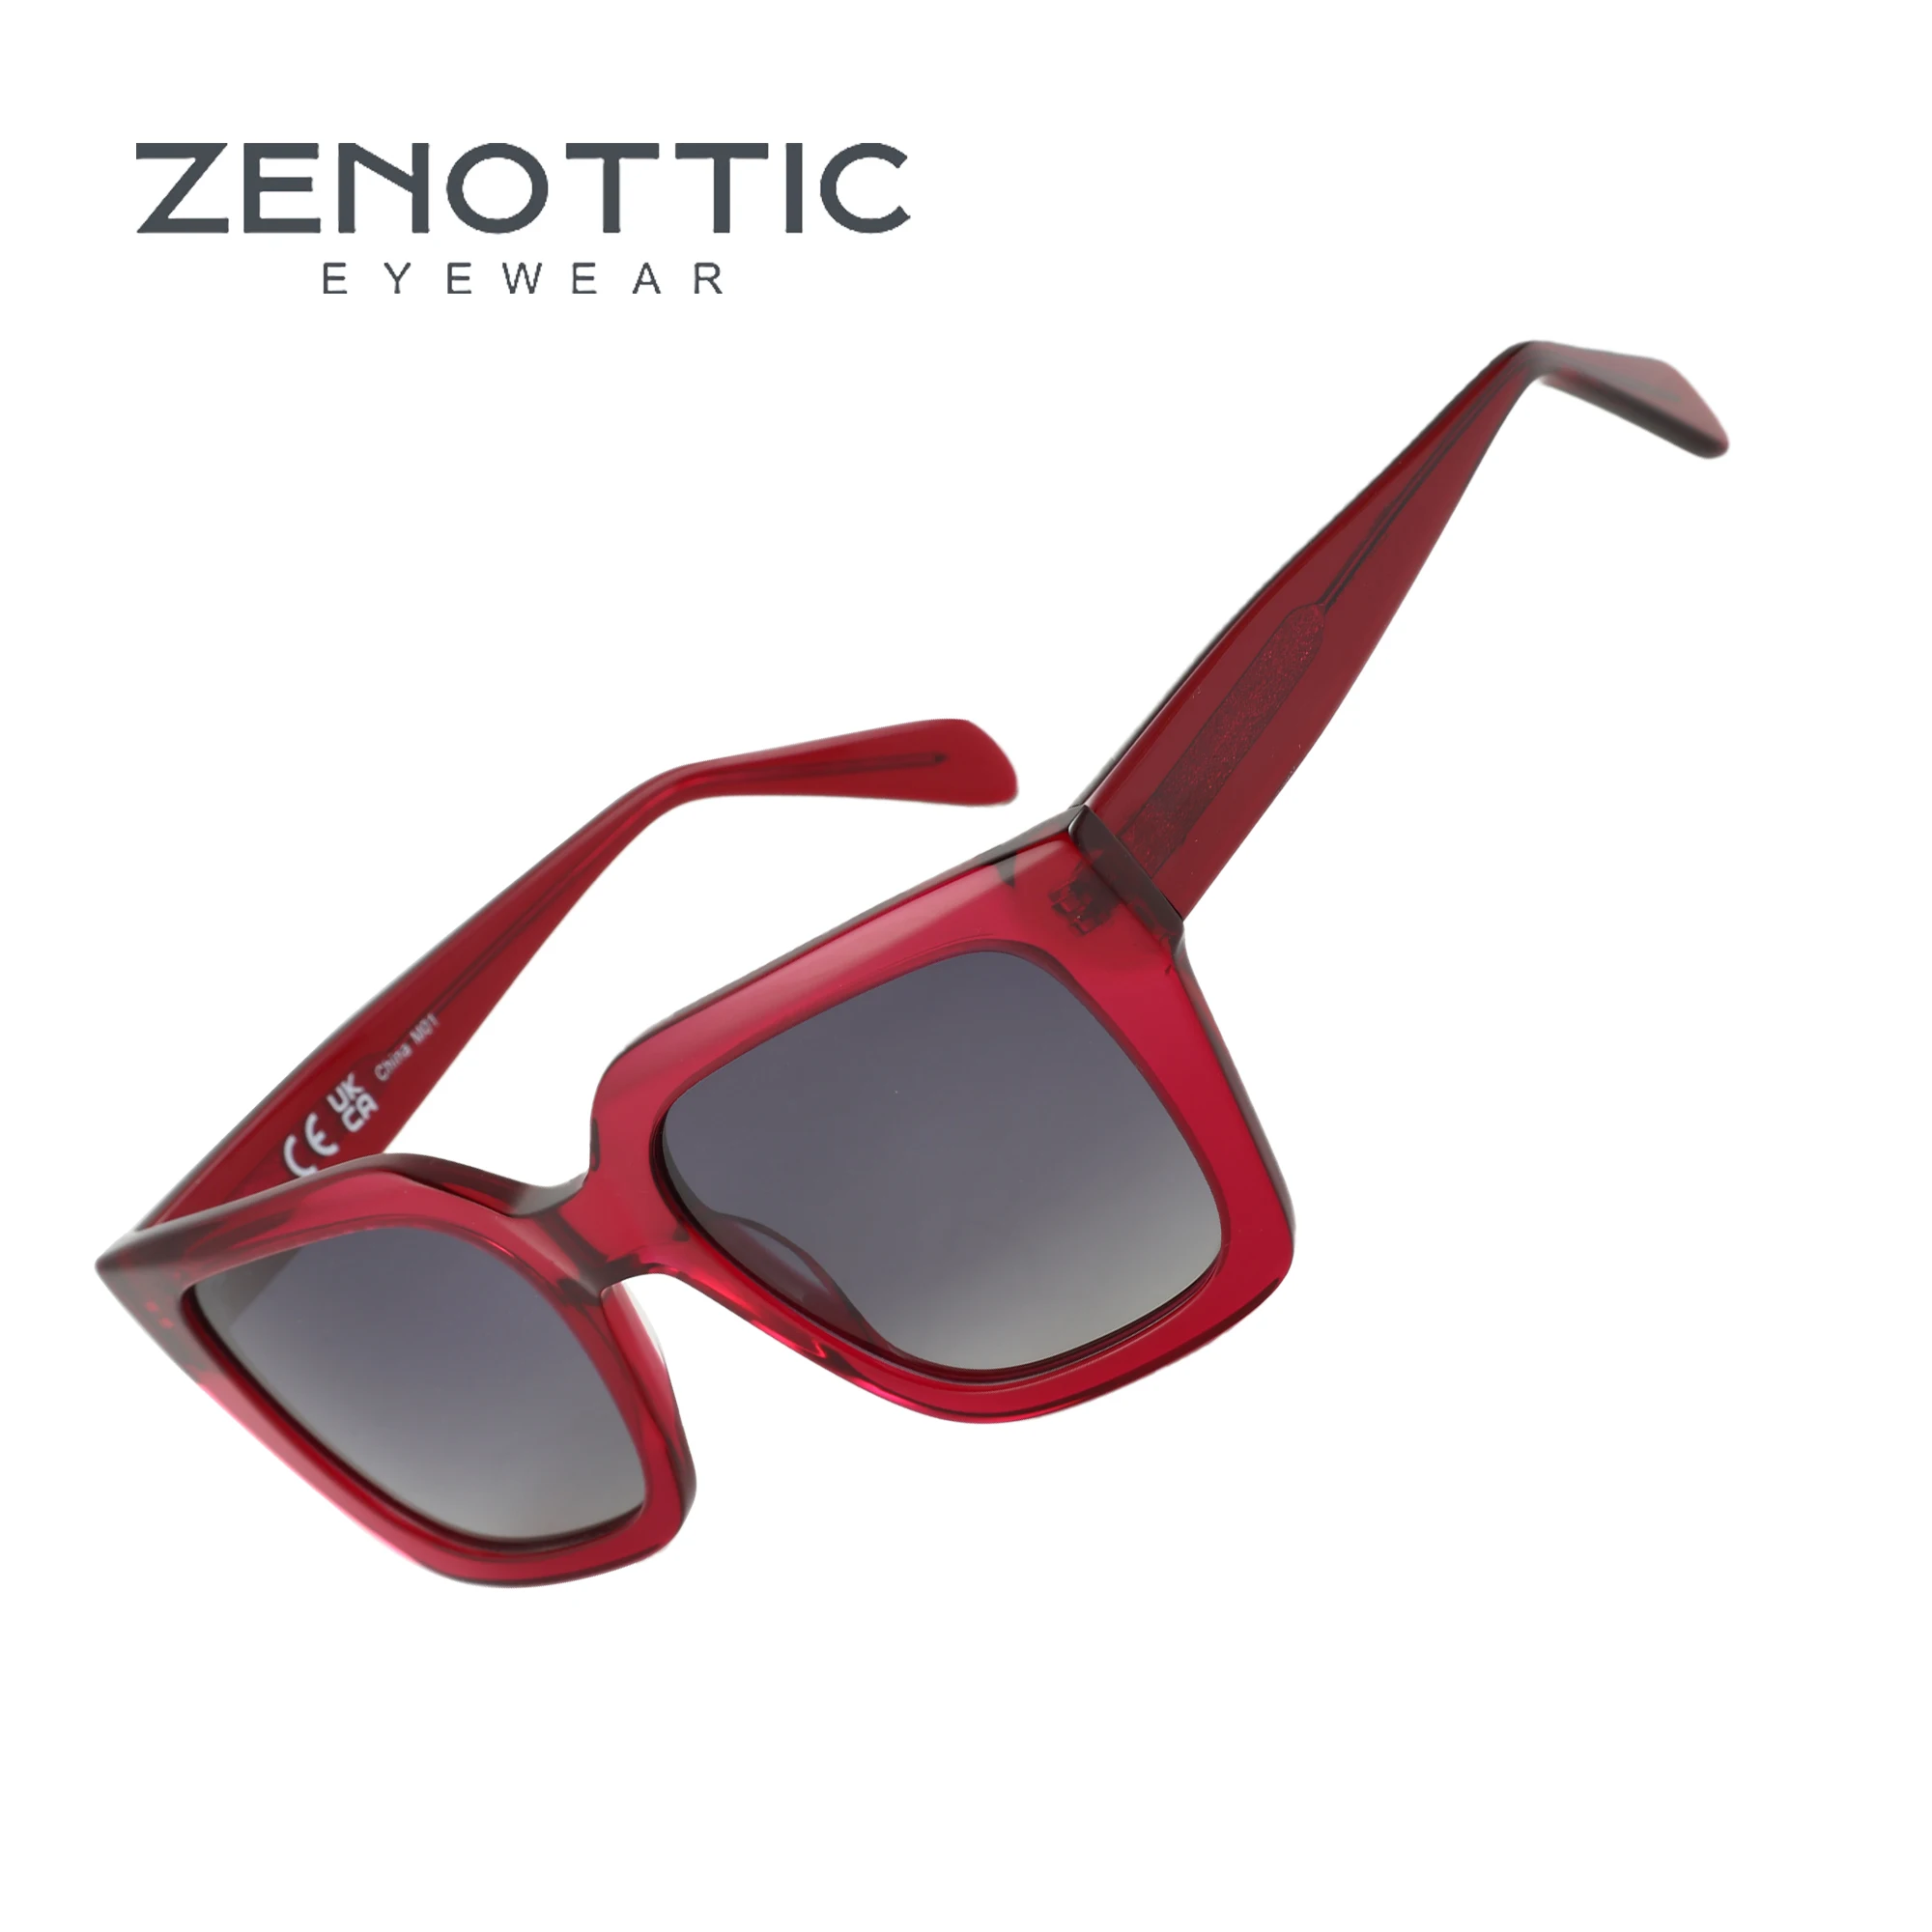 

ZENOTTIC New Trend Square Polarized Sunglasses Women Uv400 Protection Shade Ultra Light Acetate Fashion Sun Glasses ZS6217